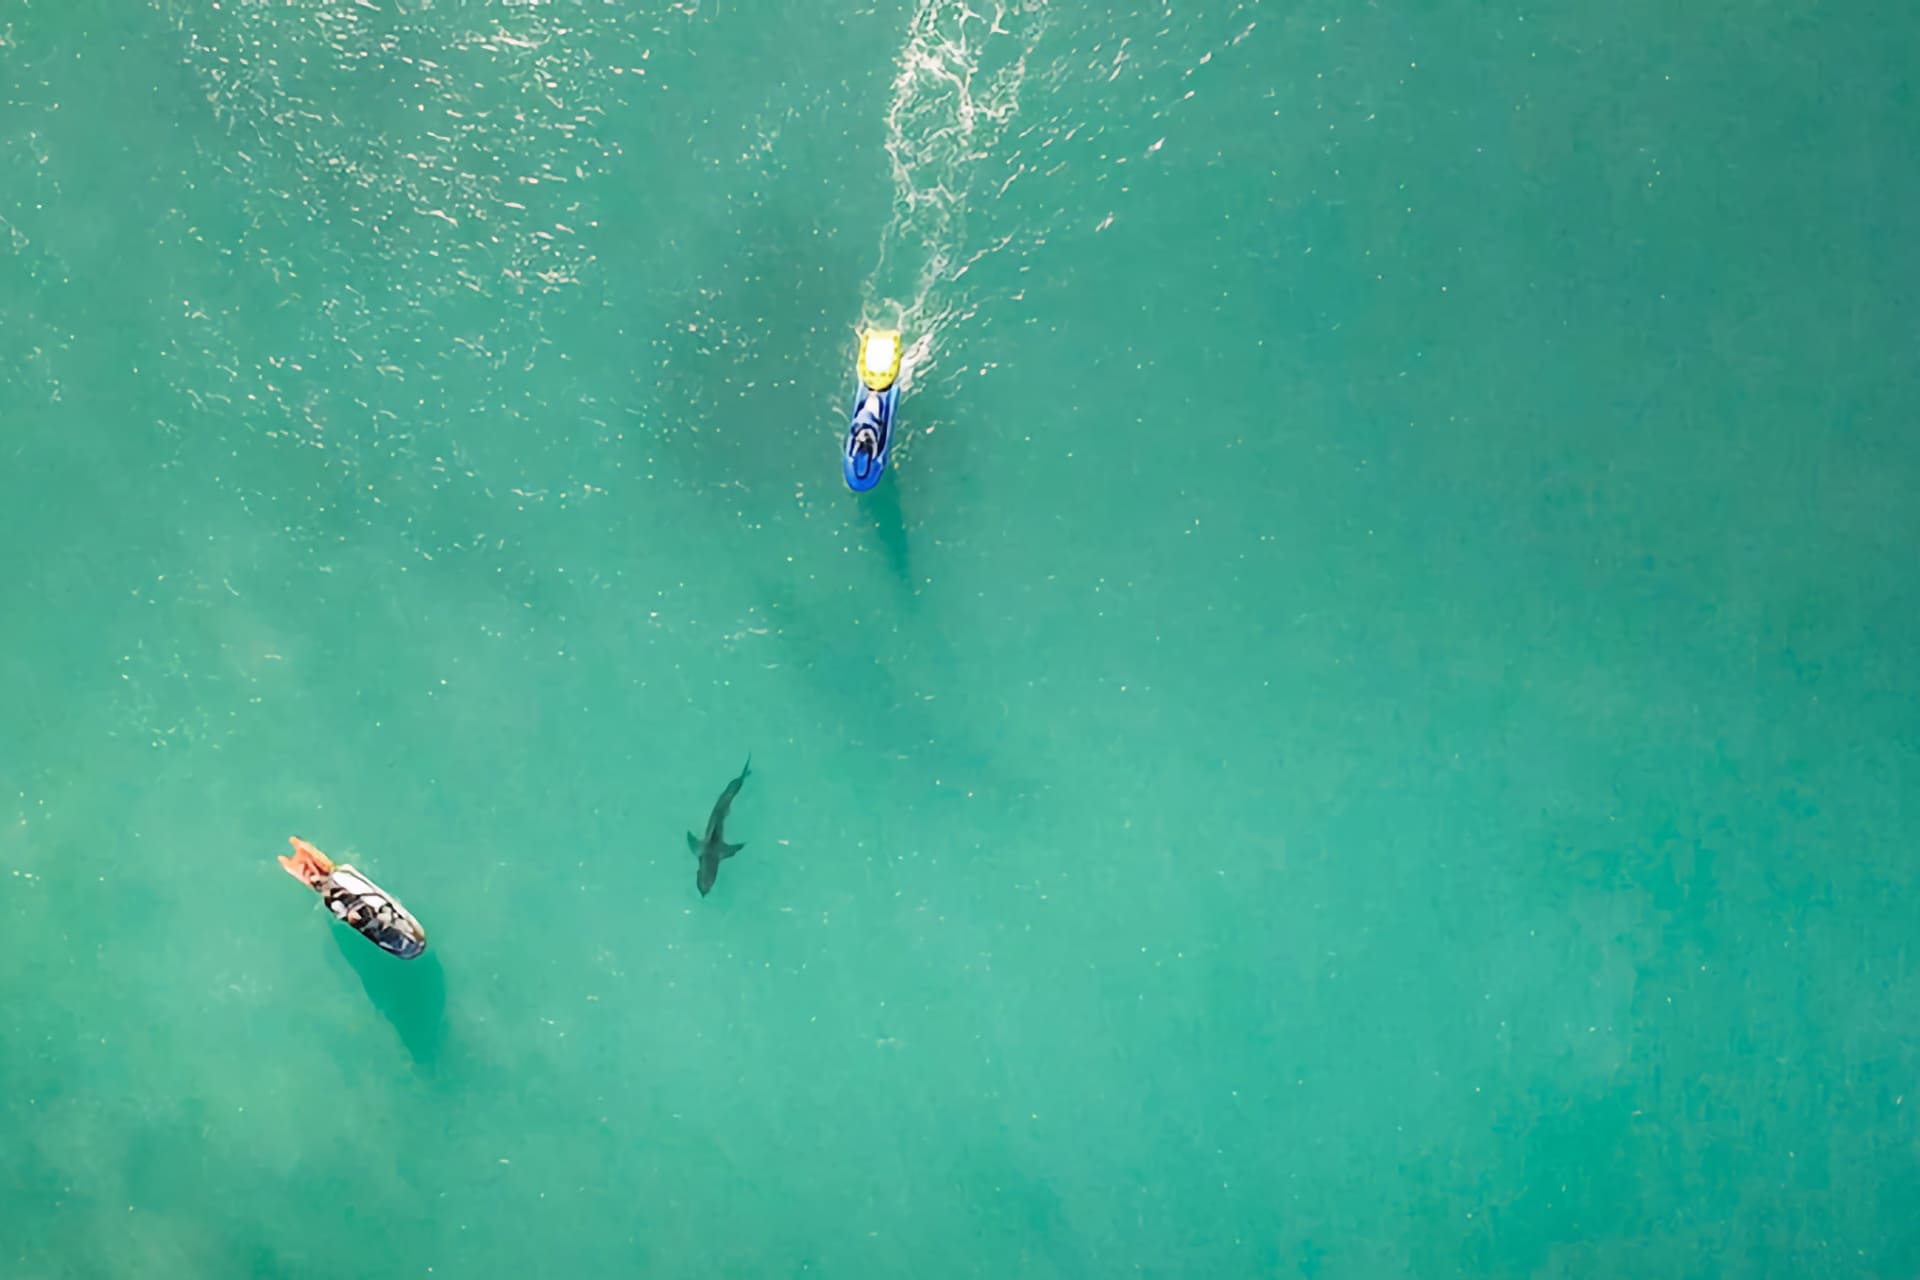 shark and jet skis